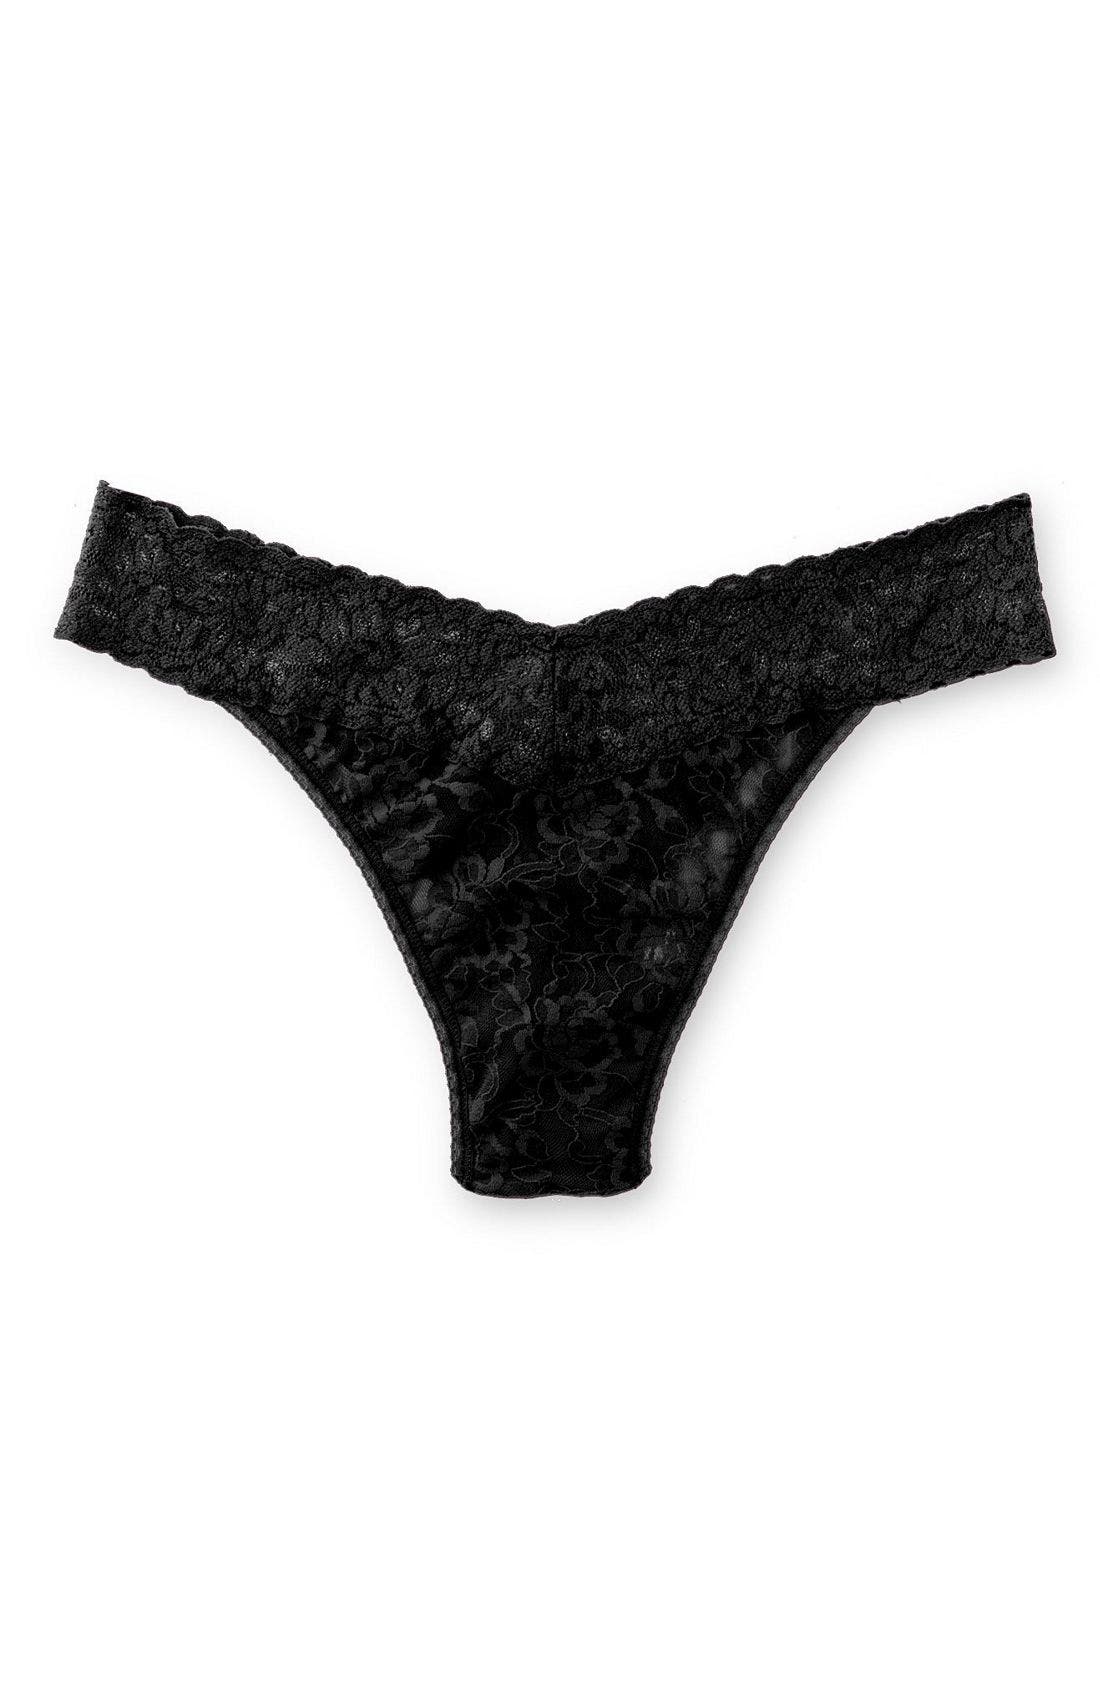 Original Rise Thong Panties Hanky Panky Women's Signature Lace